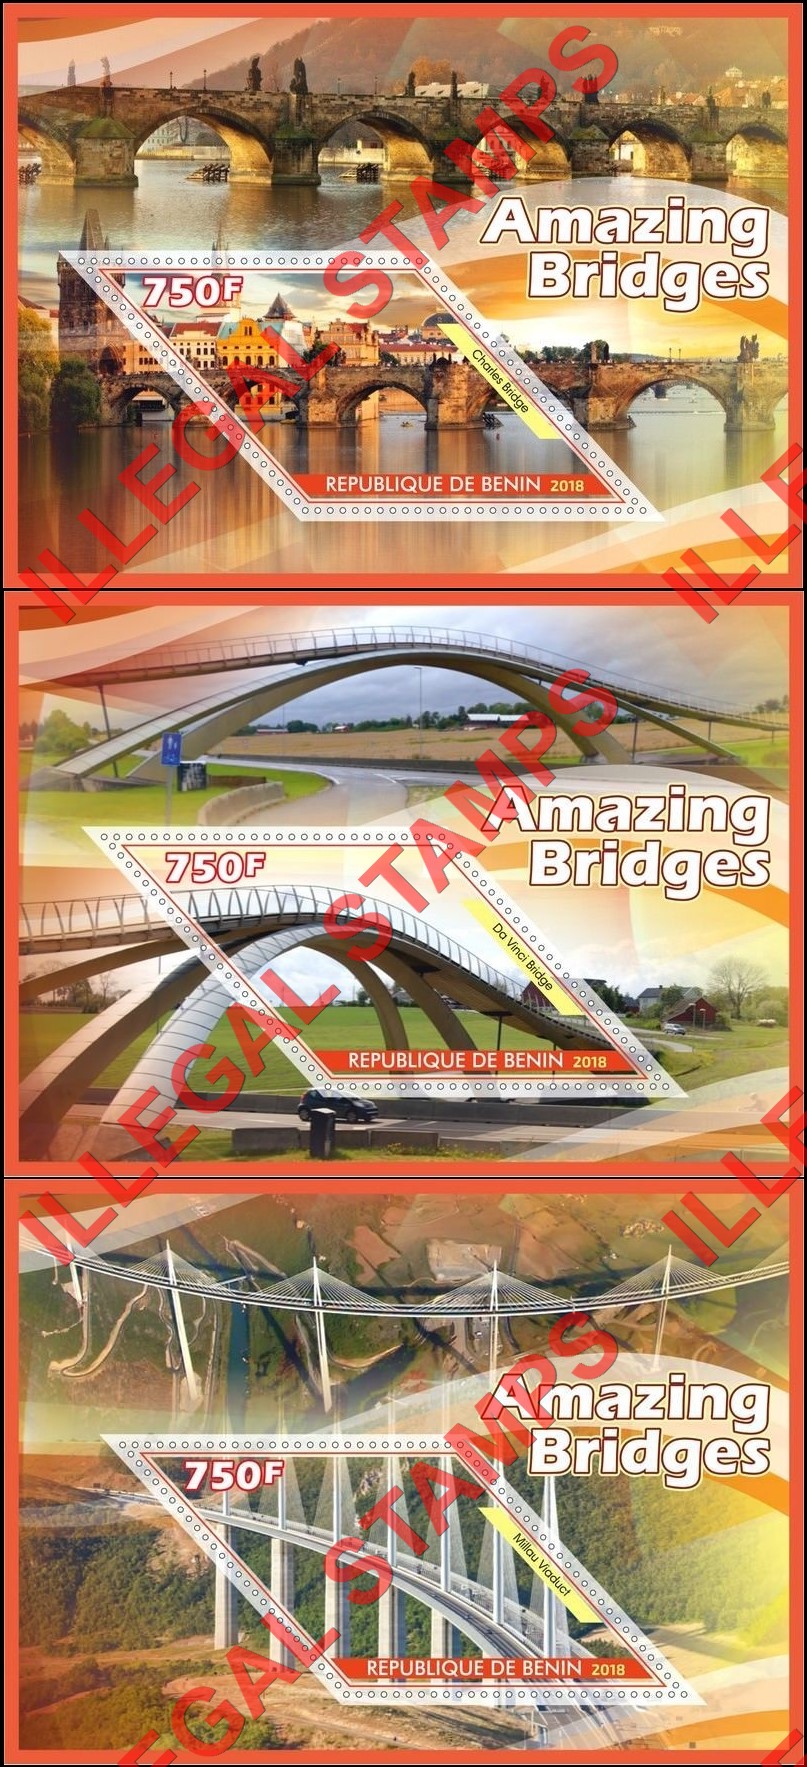 Benin 2018 Amazing Bridges Illegal Stamp Souvenir Sheets of 1 (Part 2)